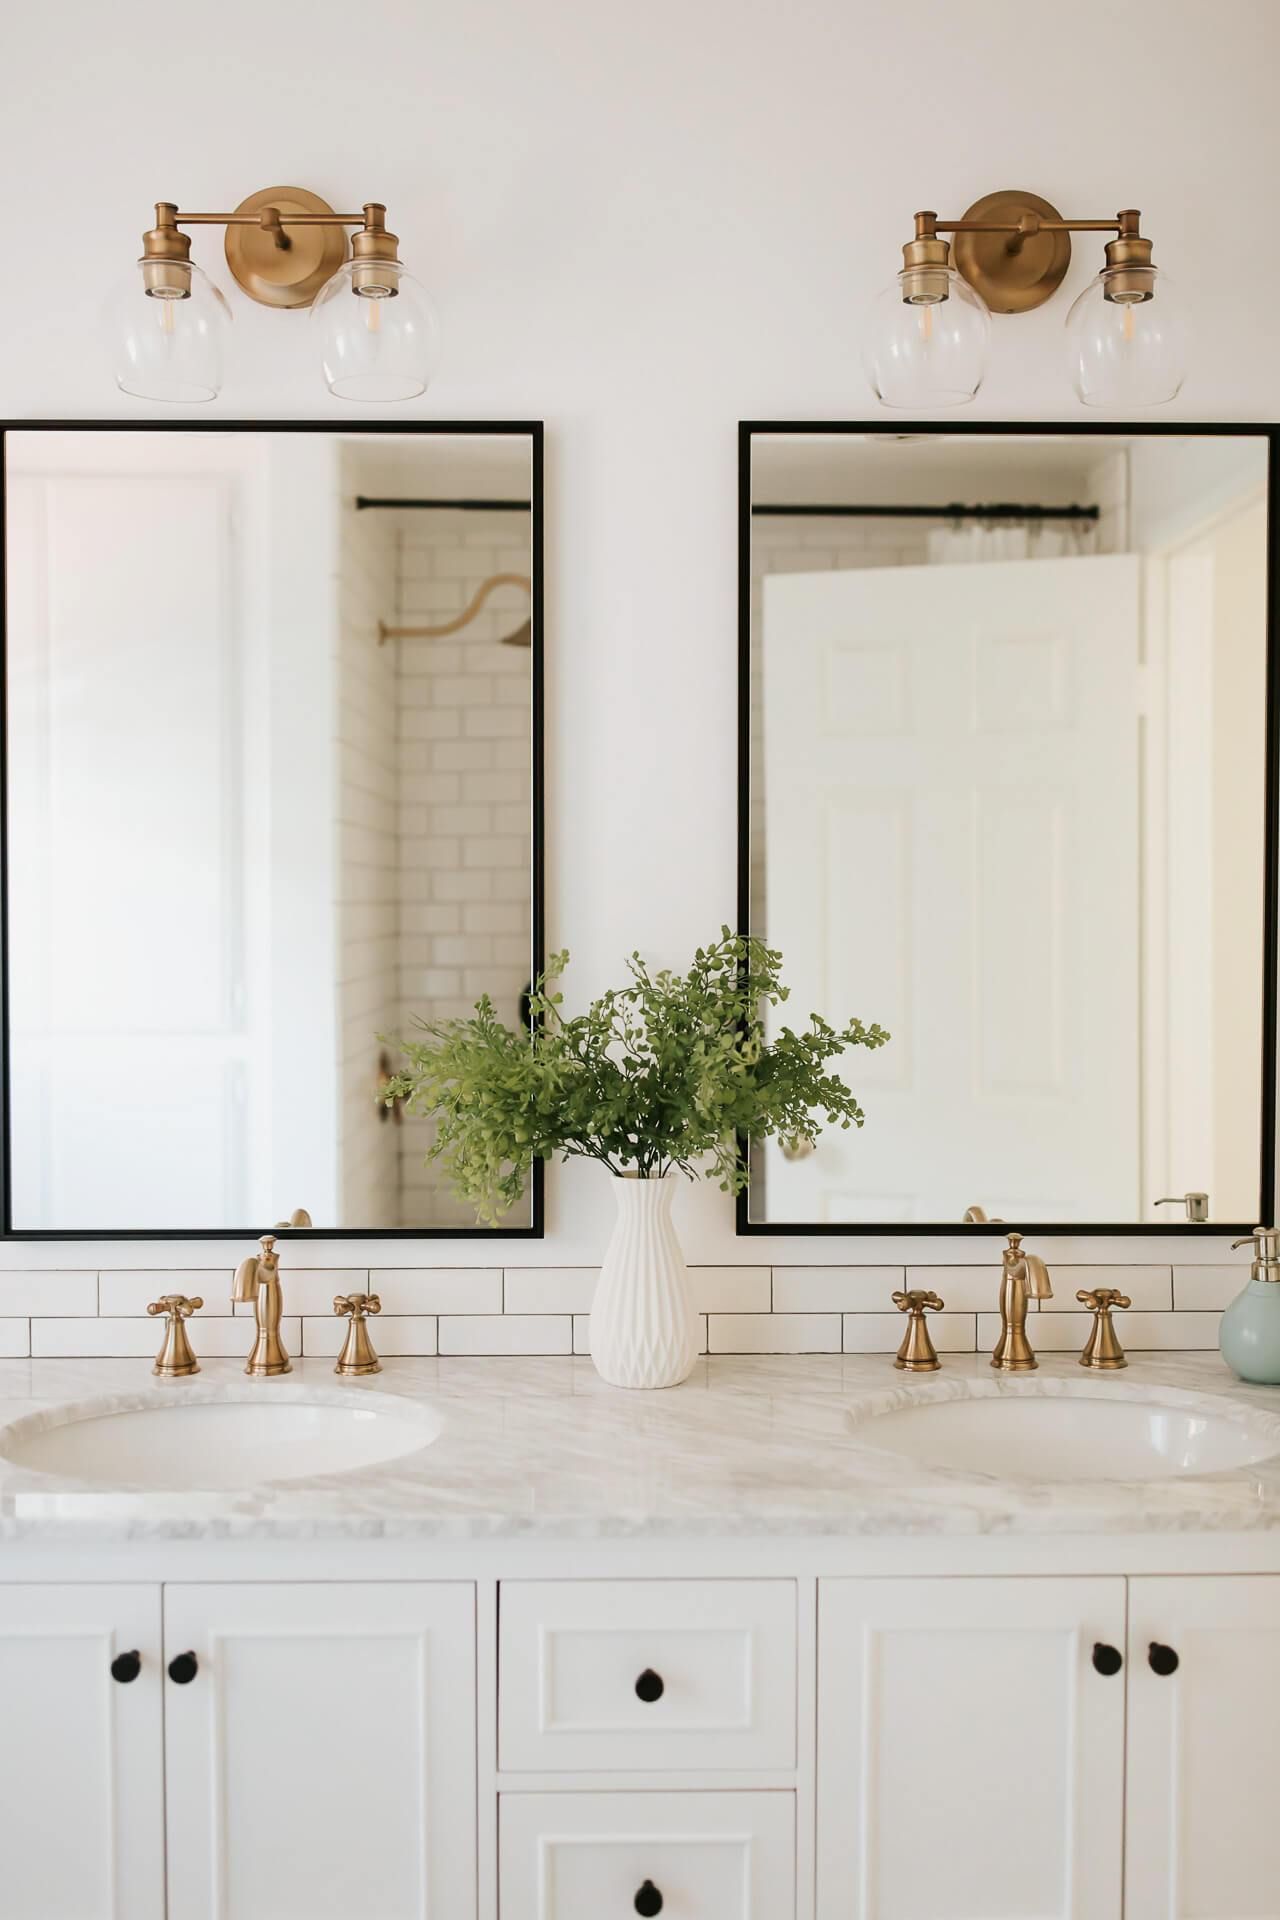 Tips for bathroom vanity lights